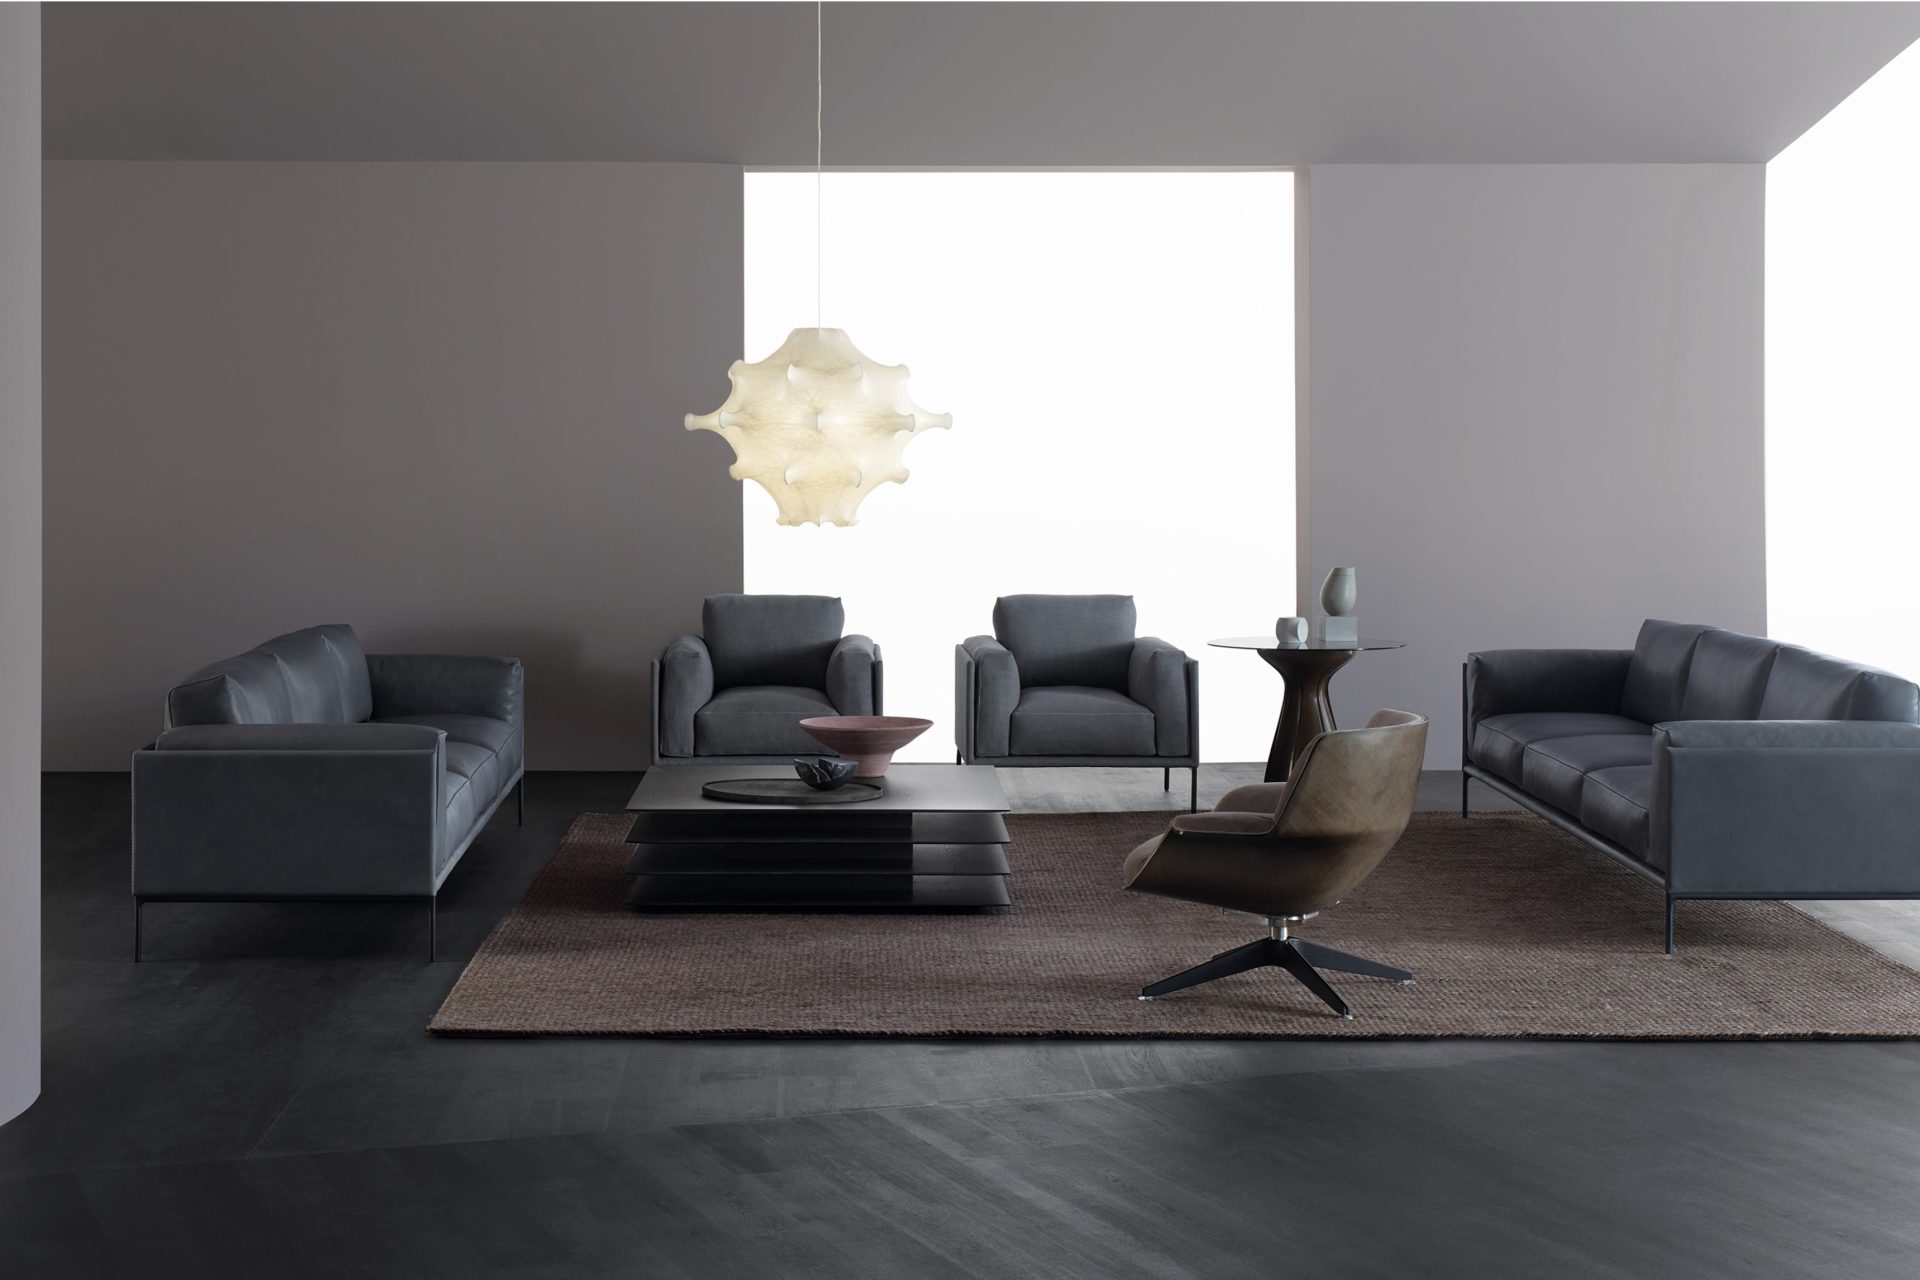 Amura, Italian brand of designer sofas and armchairs